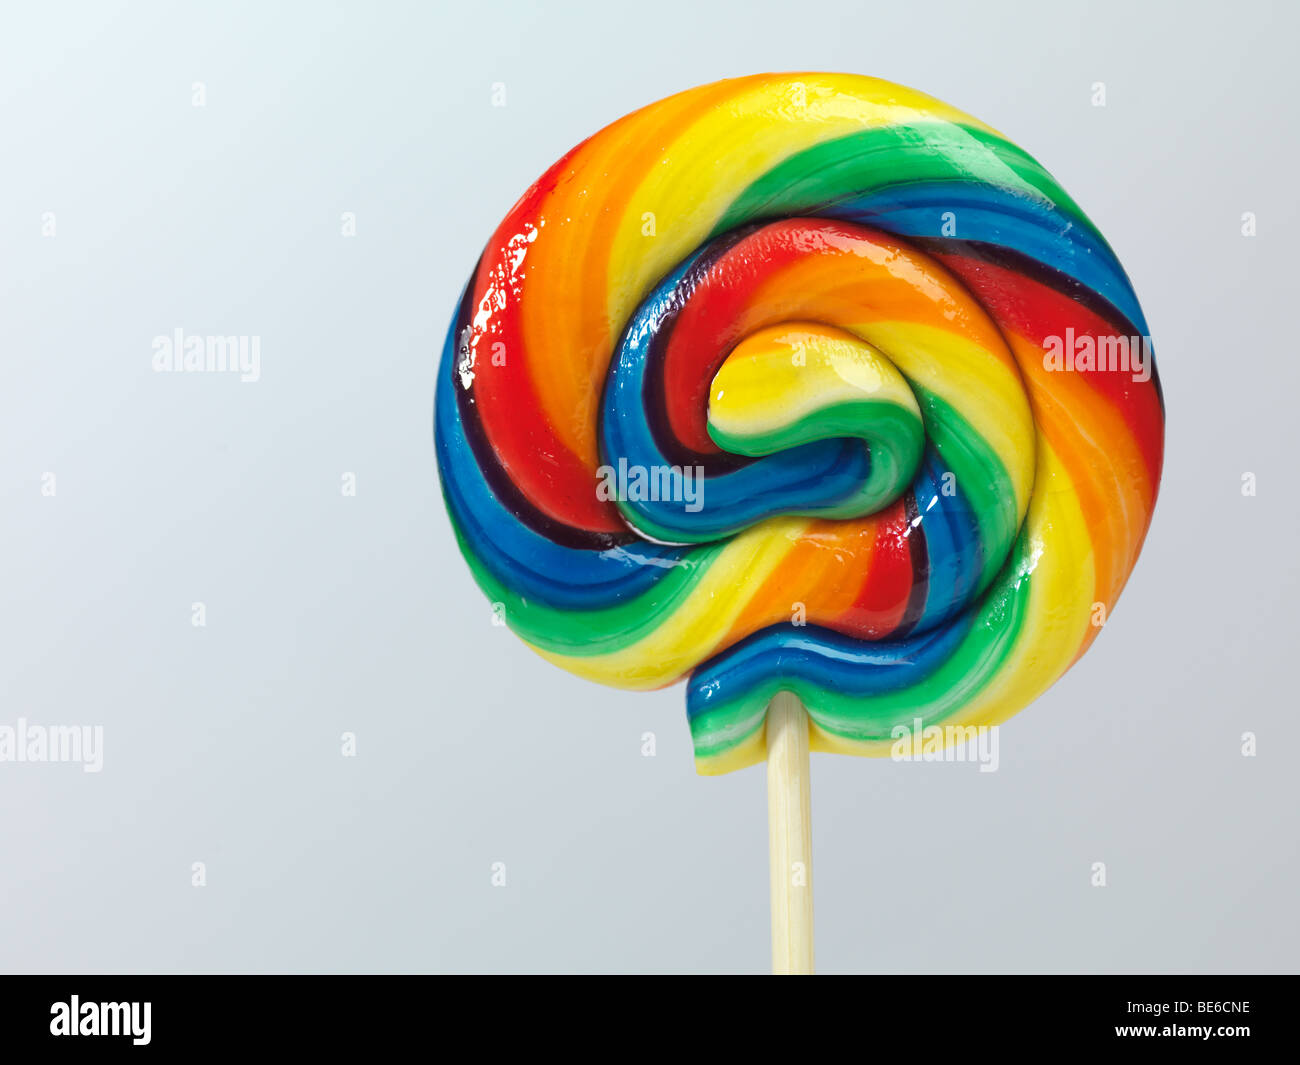 Colorful appetizing lollipop Stock Photo